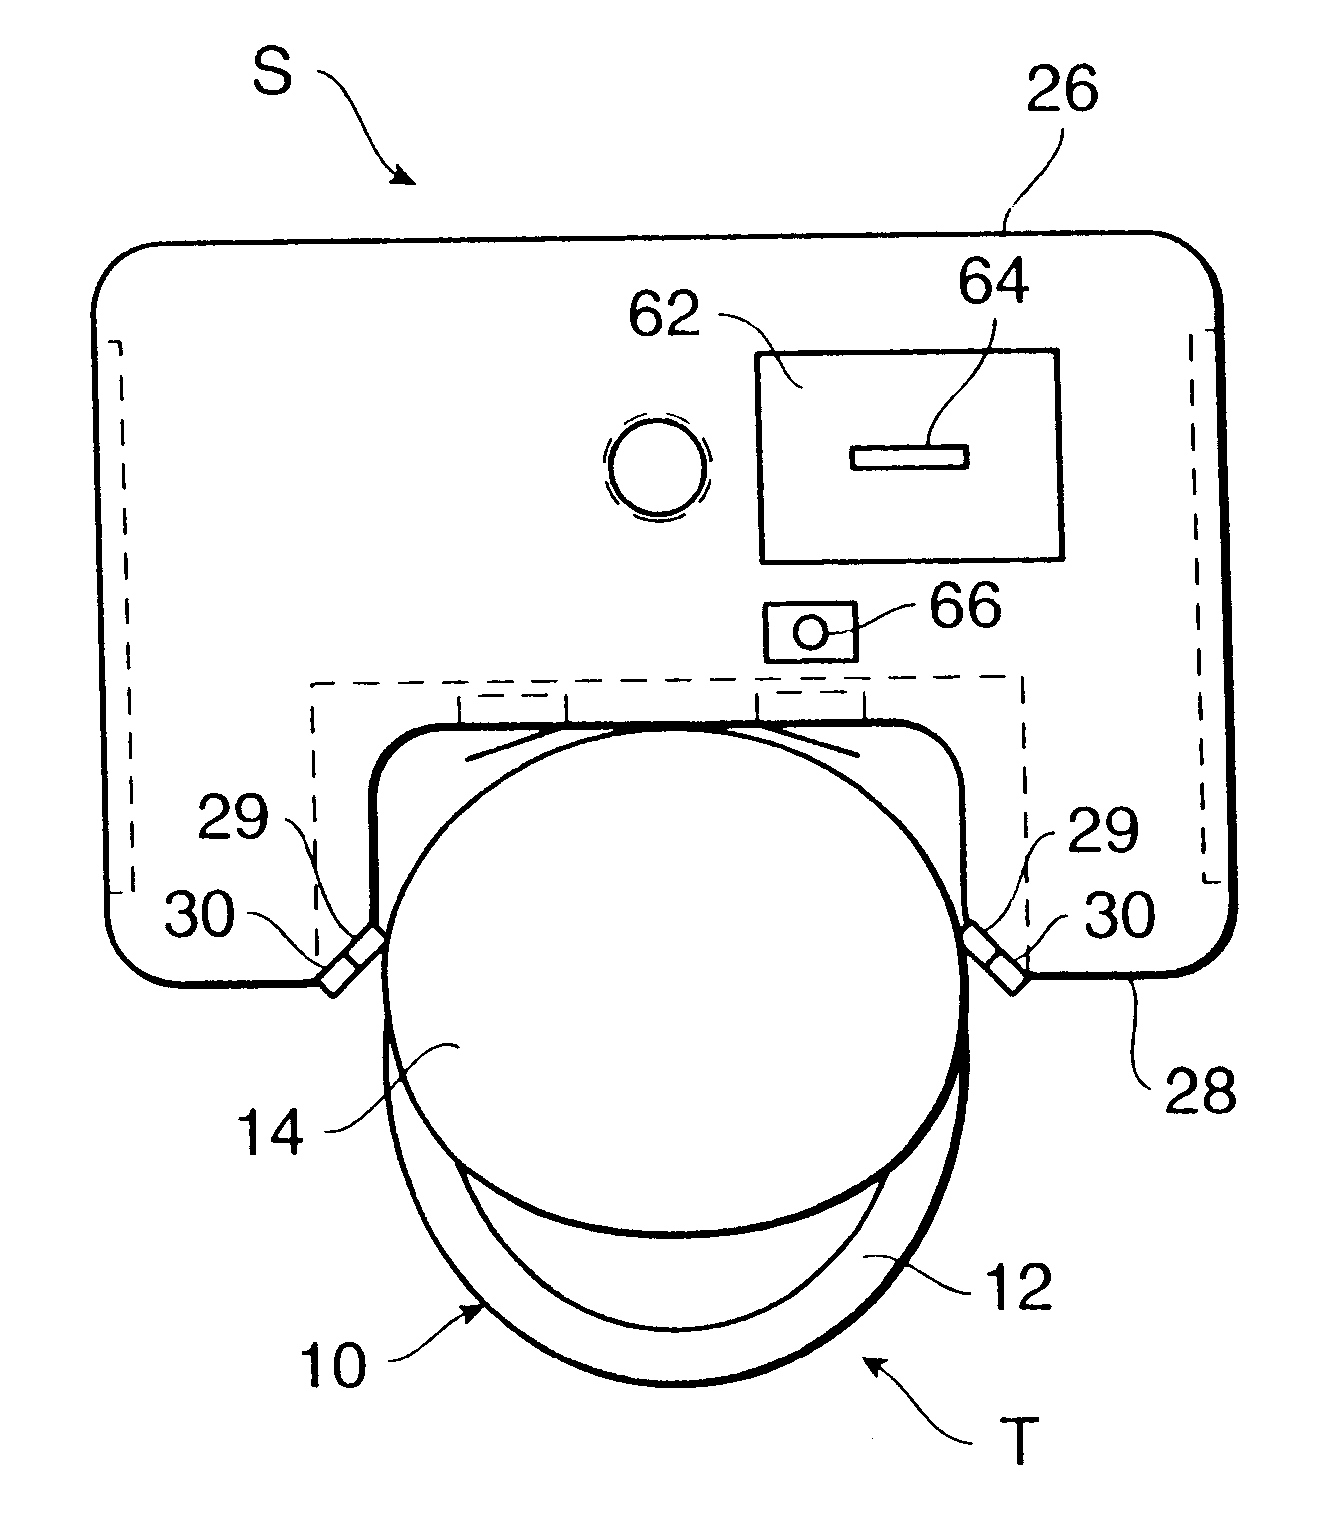 Automatic toilet flushing system